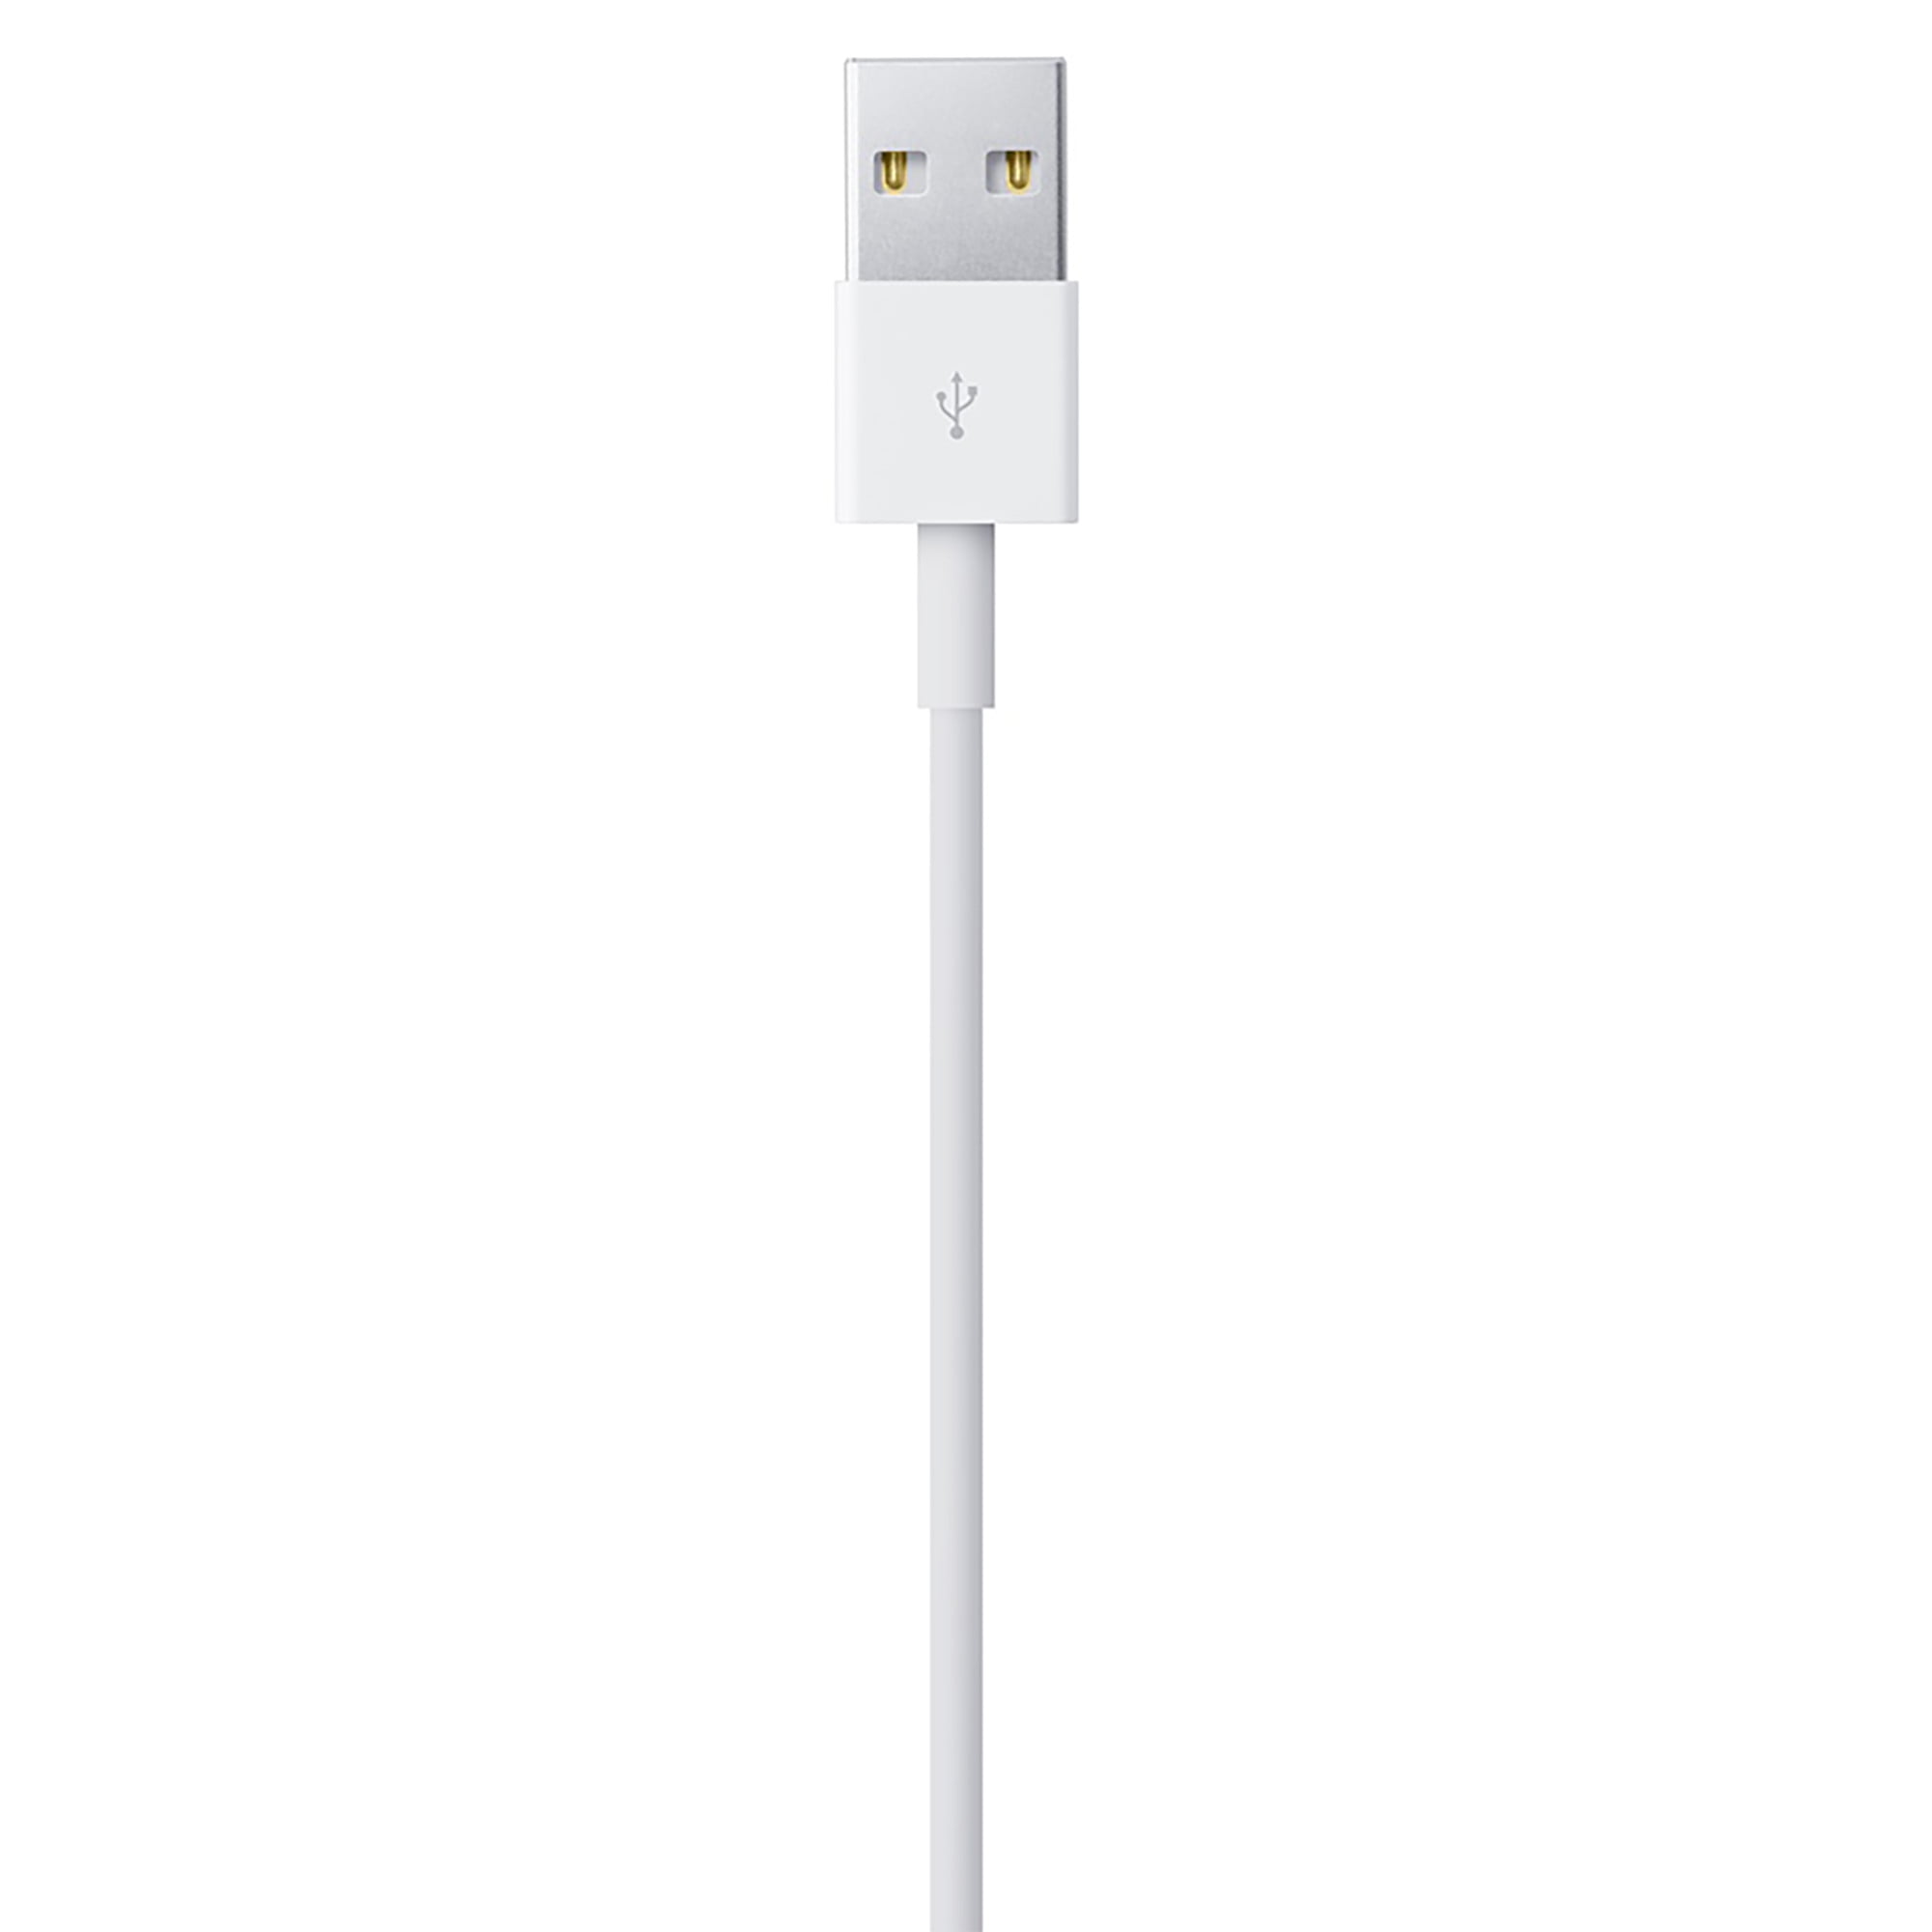 IPhone iPod cargador cable lightning 1,2 m power adaptador blanco USB 1a 